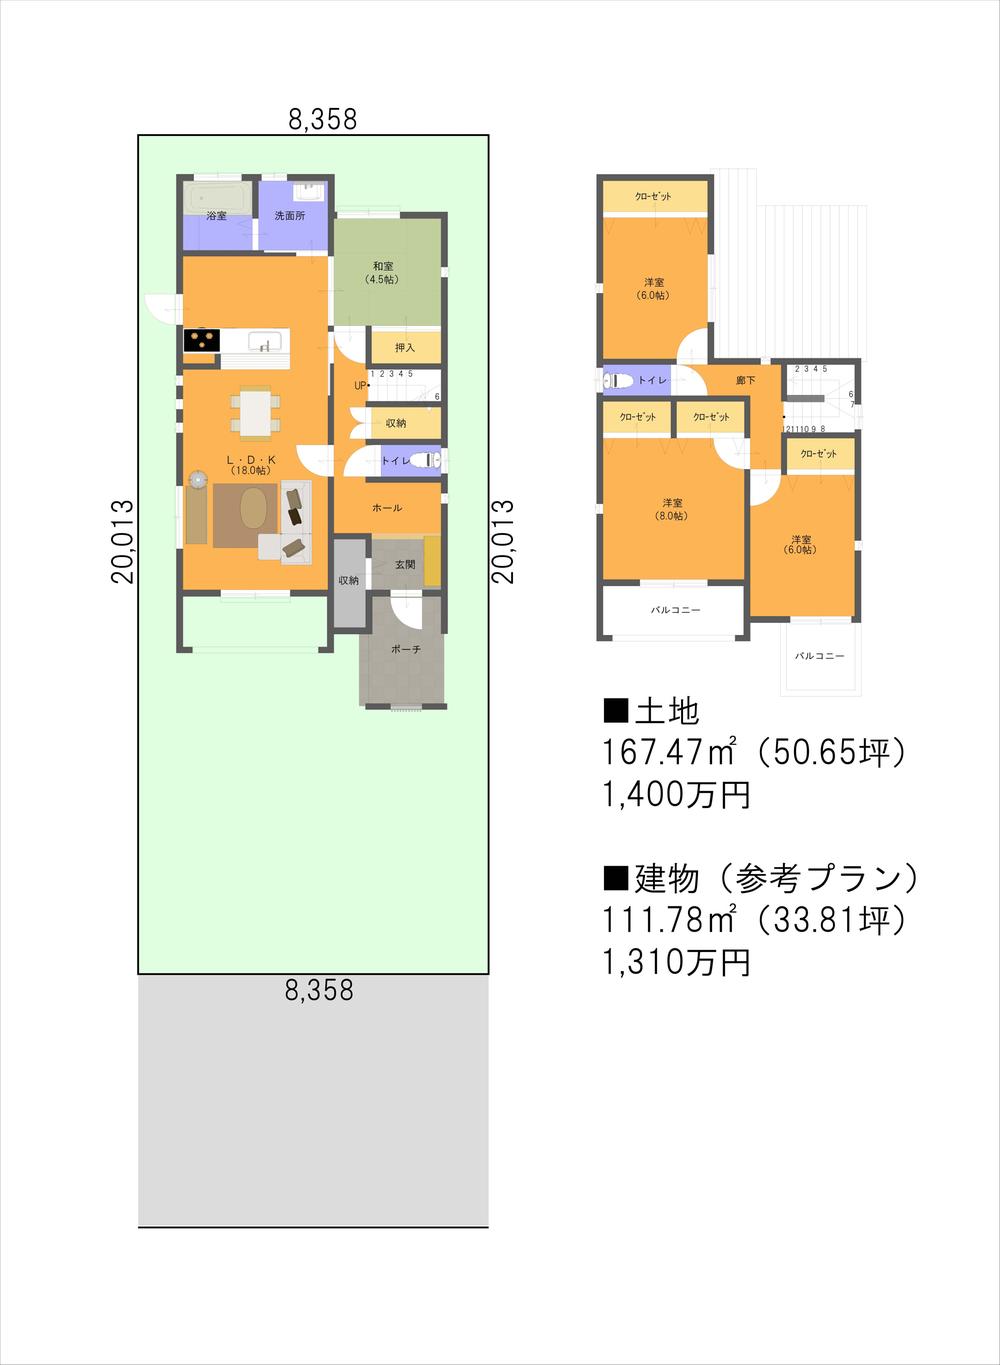 Building plan example (floor plan). Building plan example (B No. land) Building price 13.1 million yen, Building area 111.78 sq m